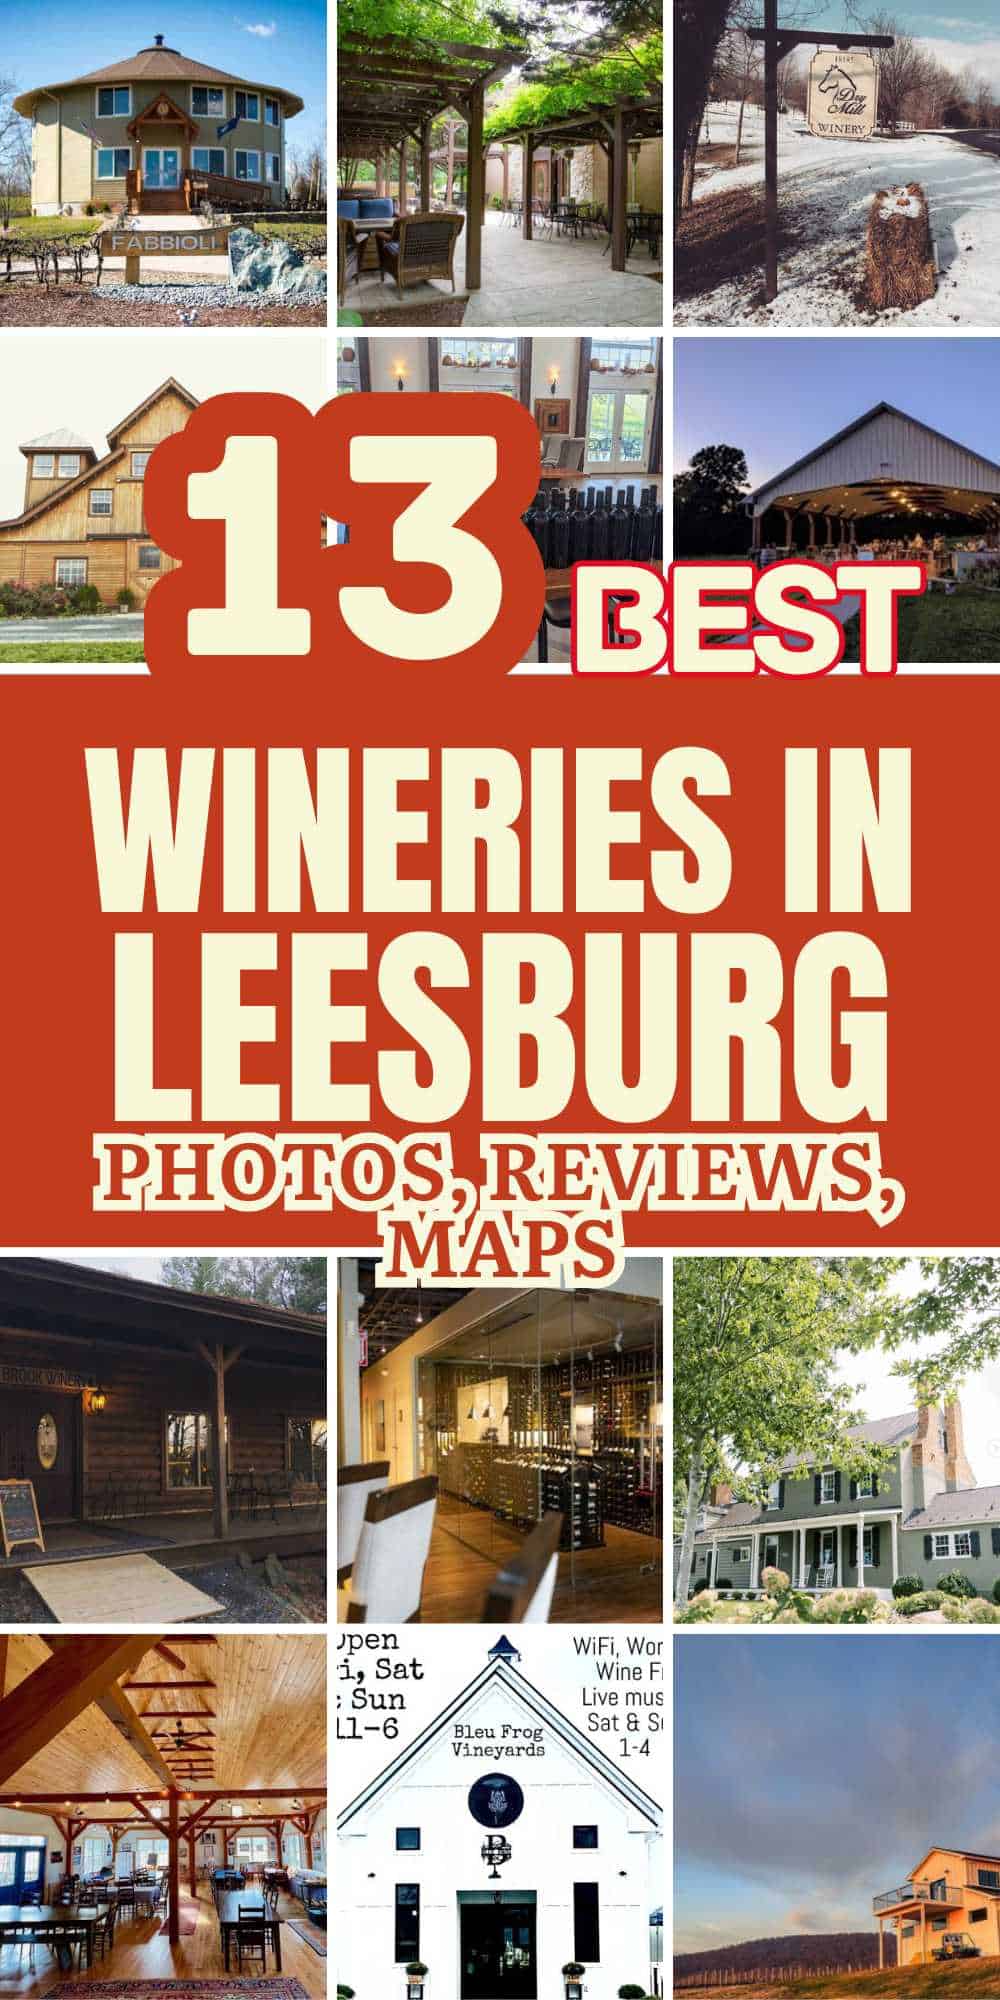 Wineries in Leesburg, VA